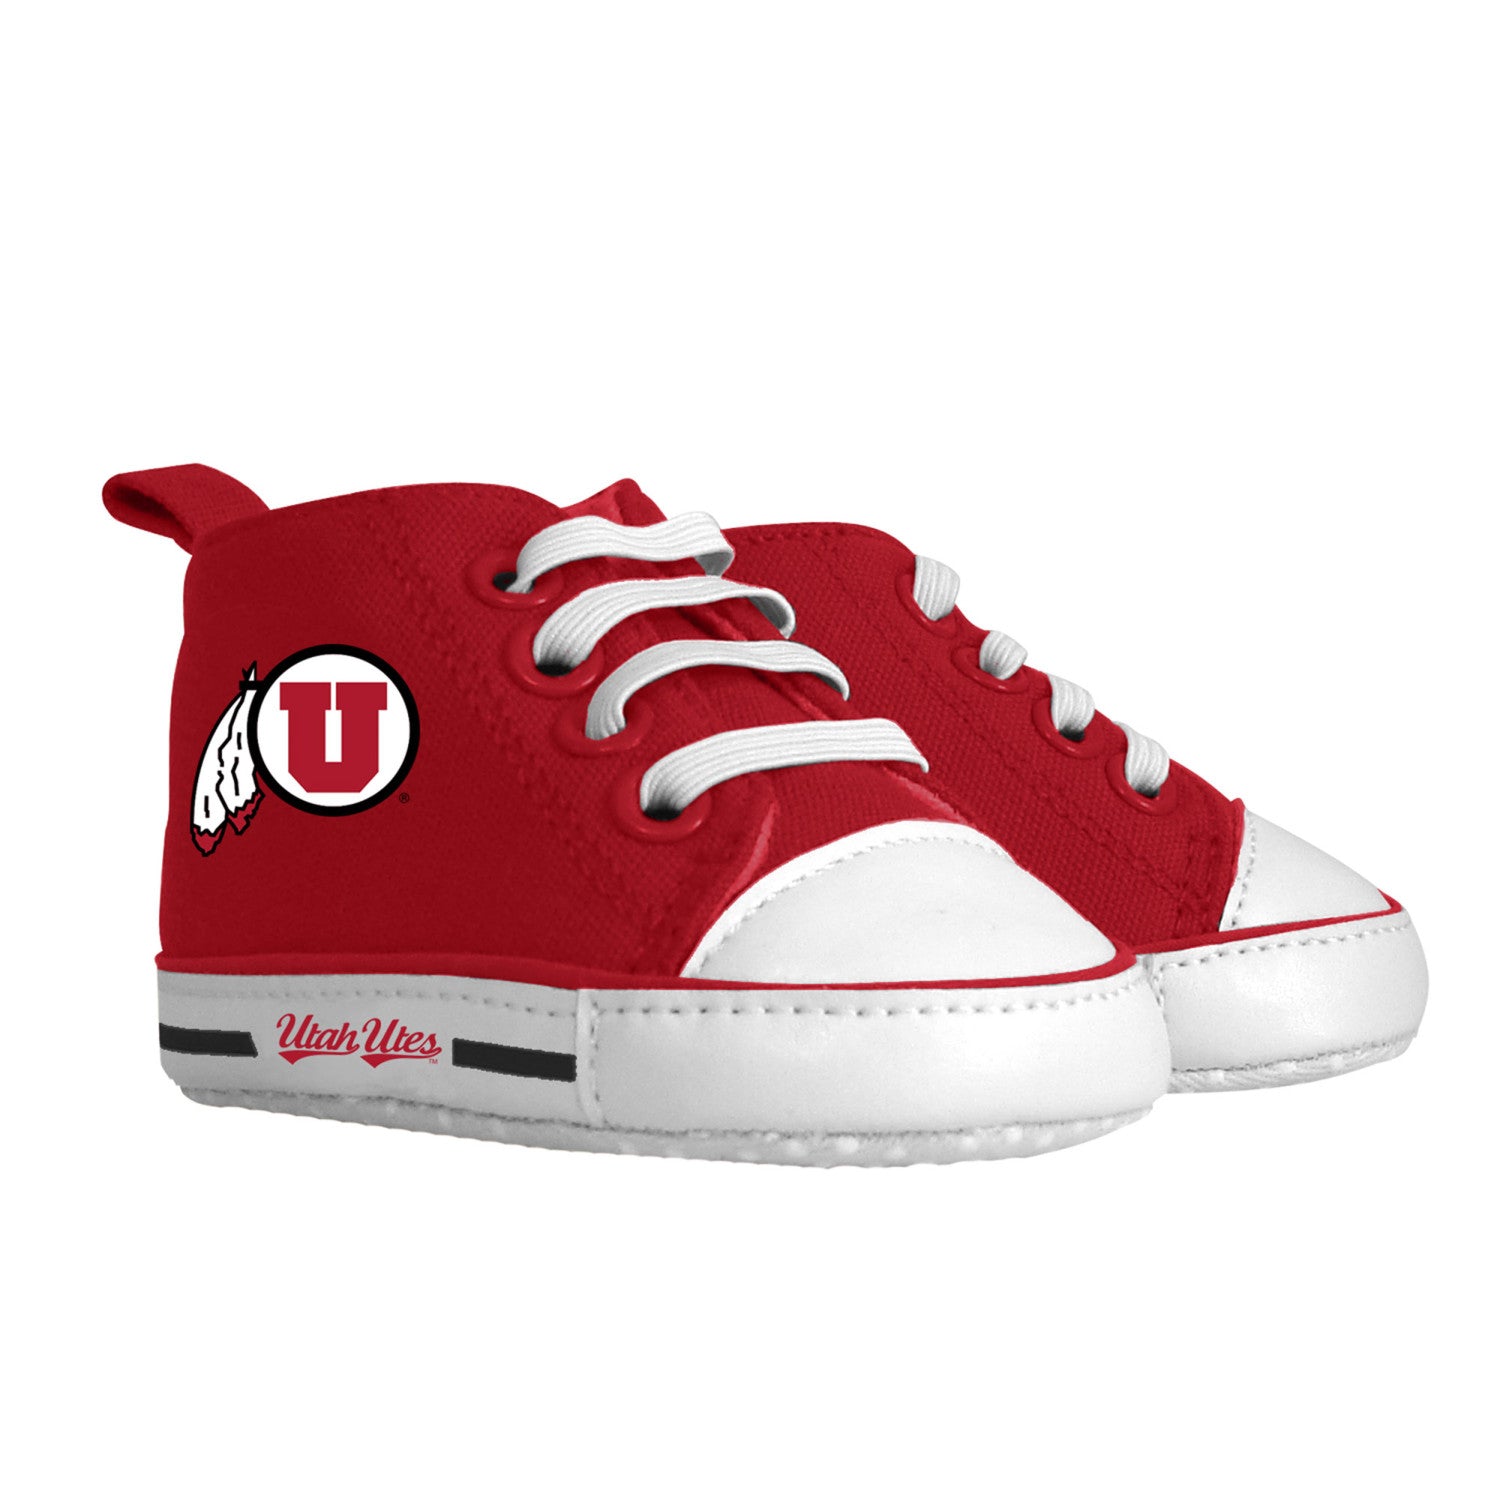 Utah Utes Baby Shoes